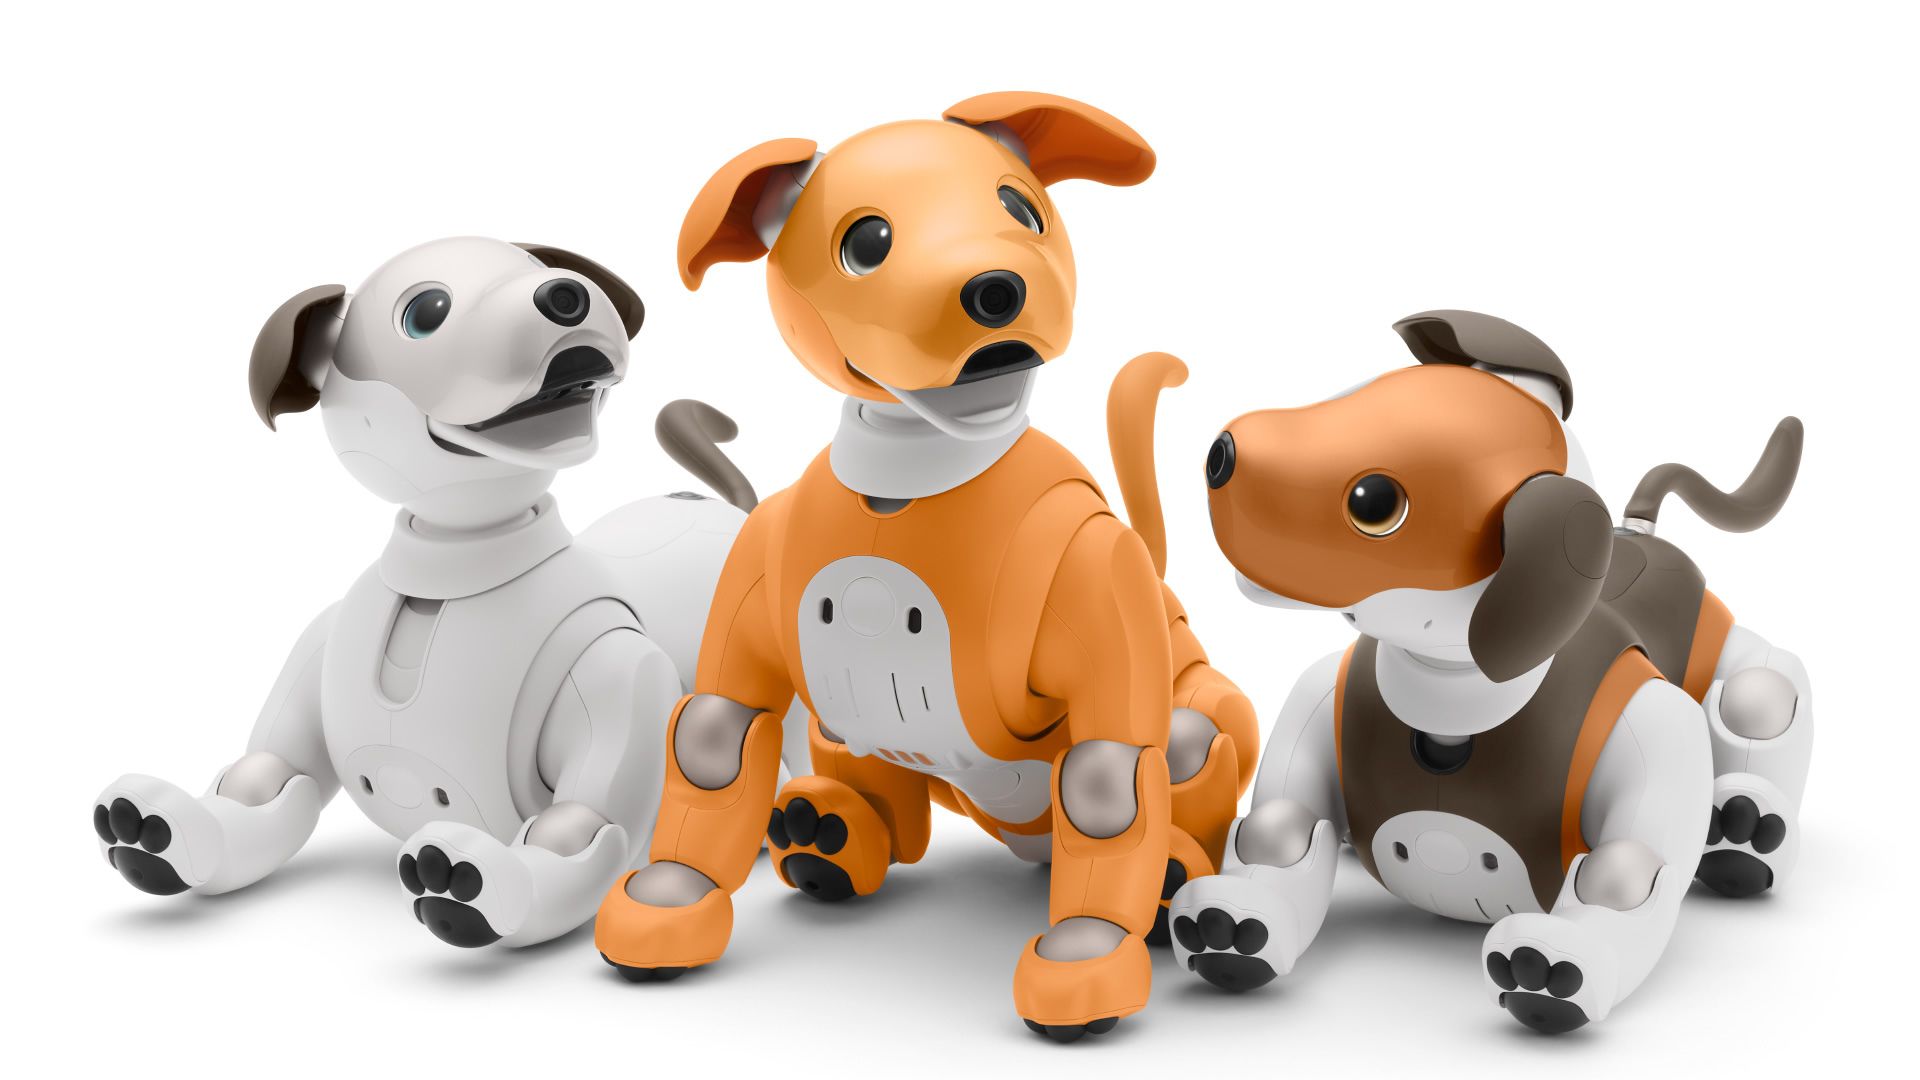 5 pet robot concepts we like - AIBO